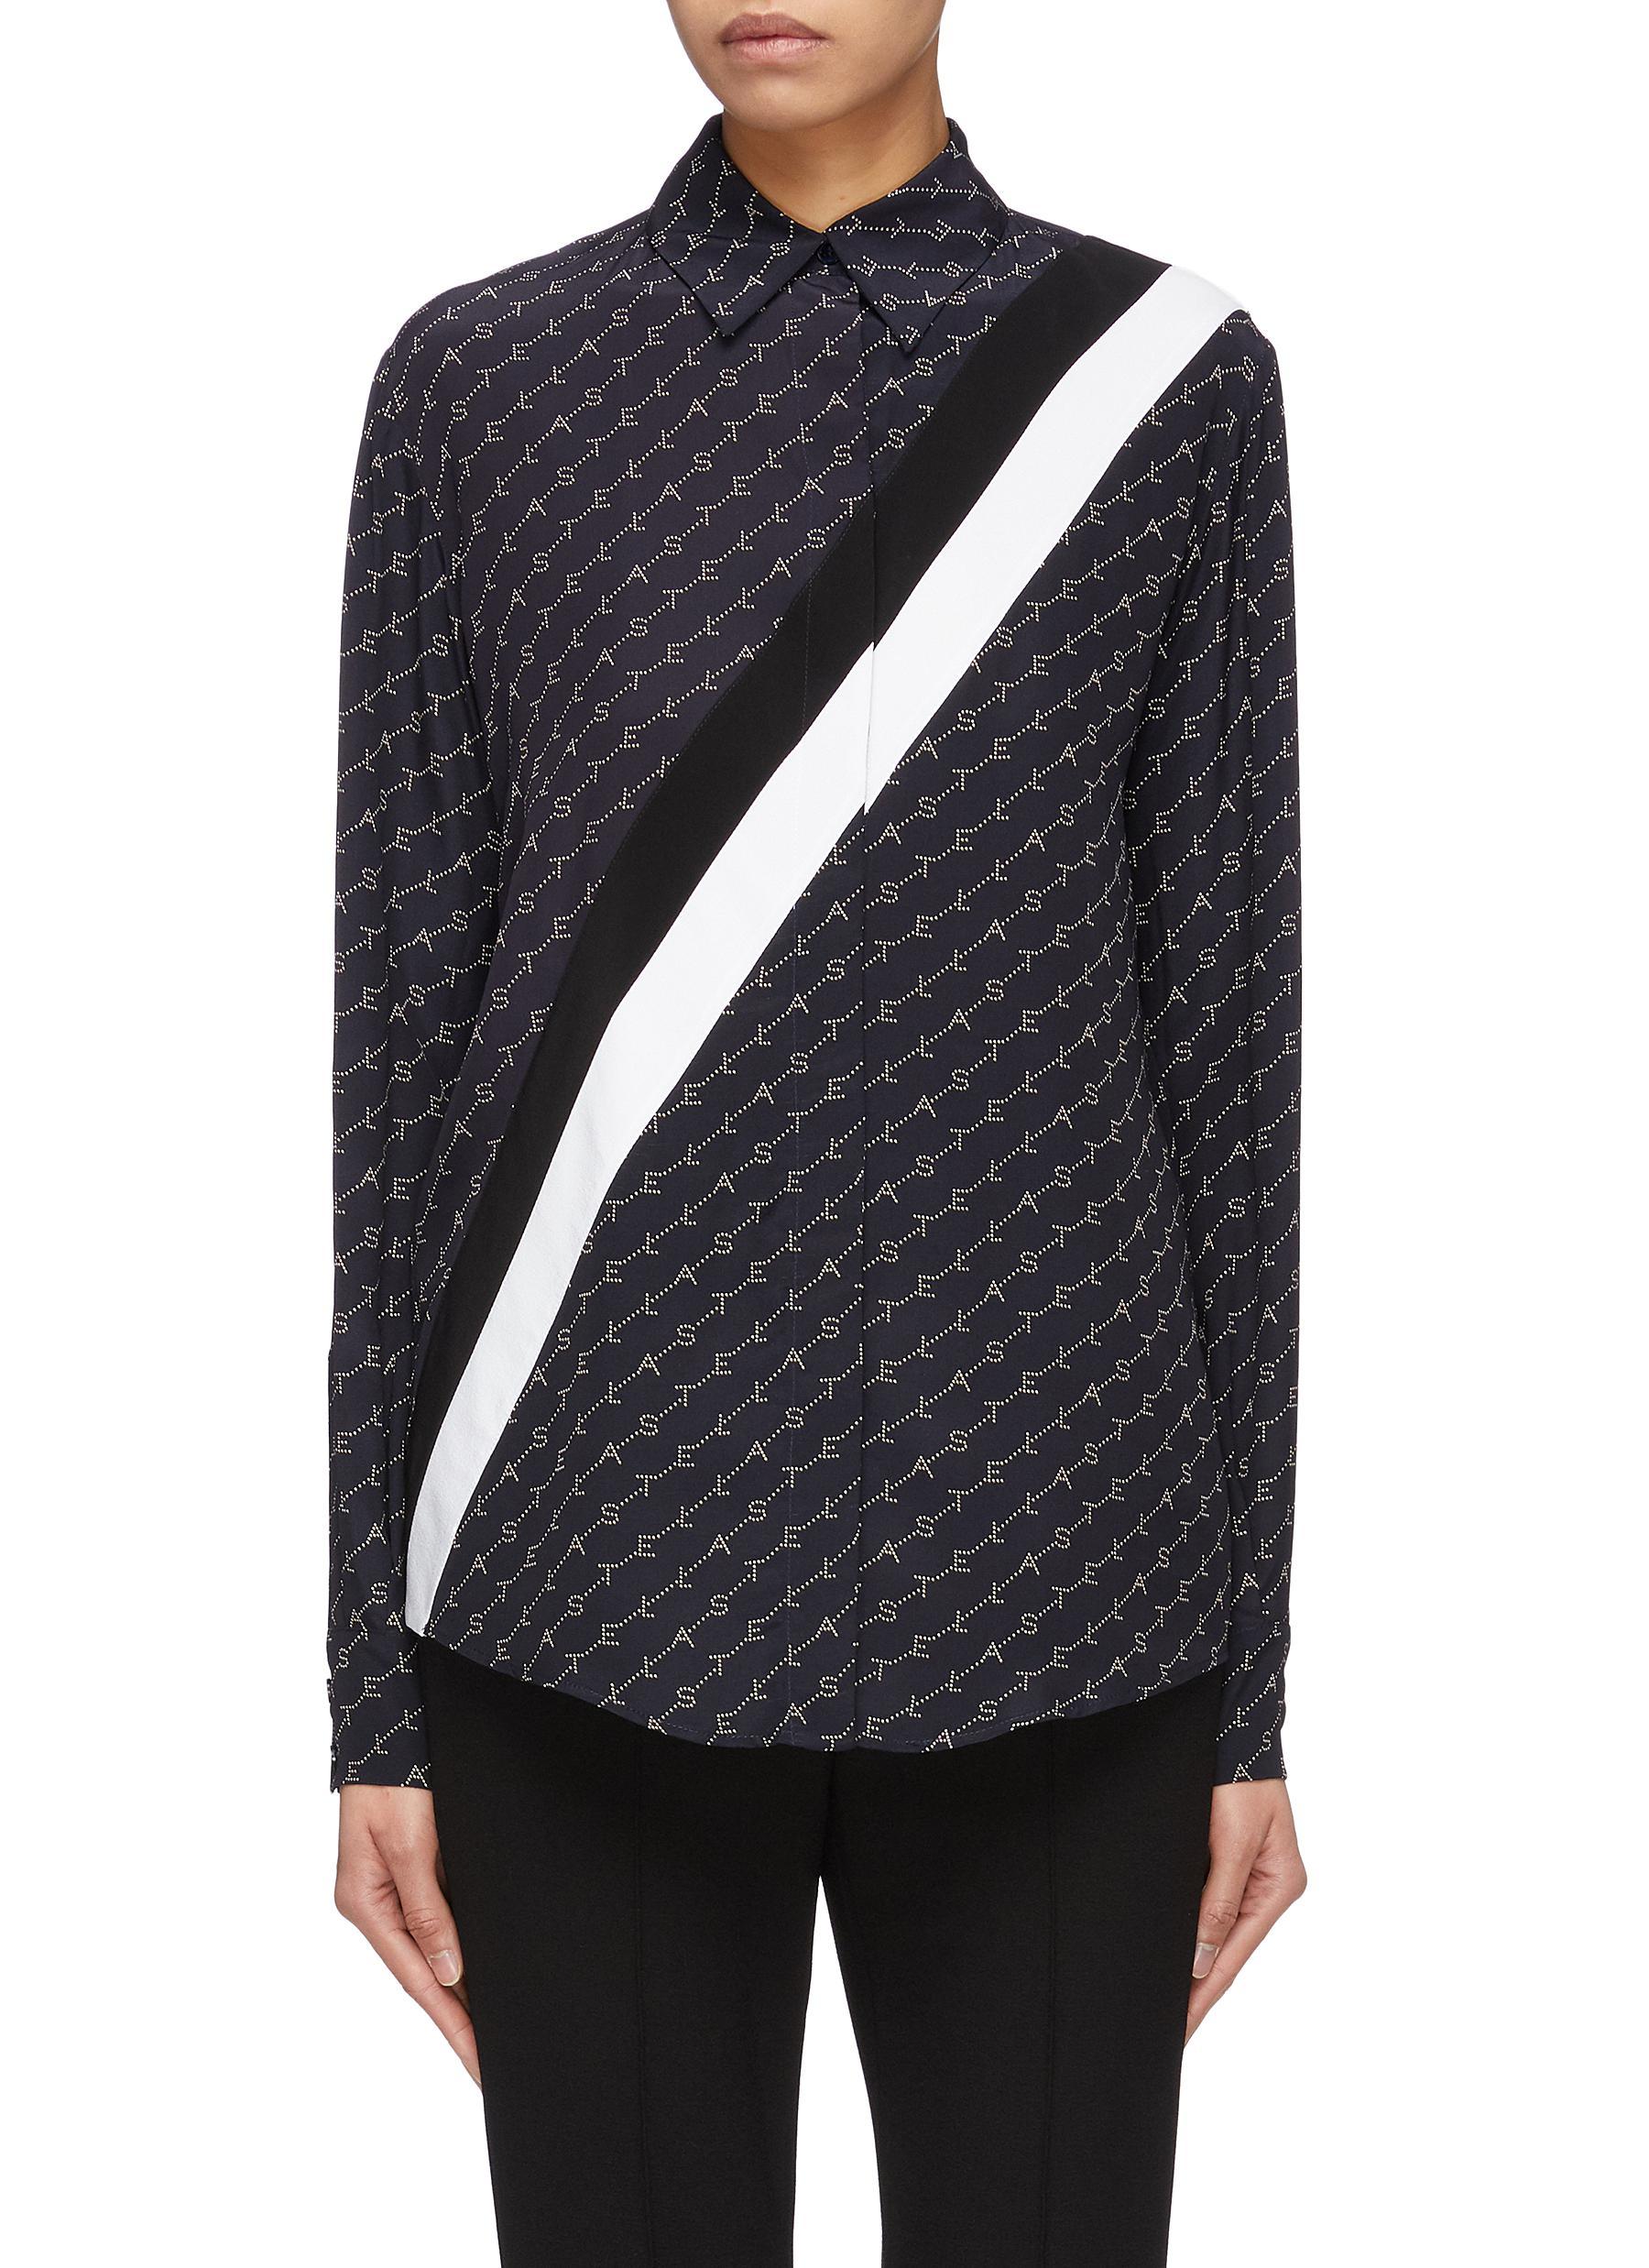 Stella McCartney Diagonal Stripe Monogram Silk Shirt for Men - Lyst